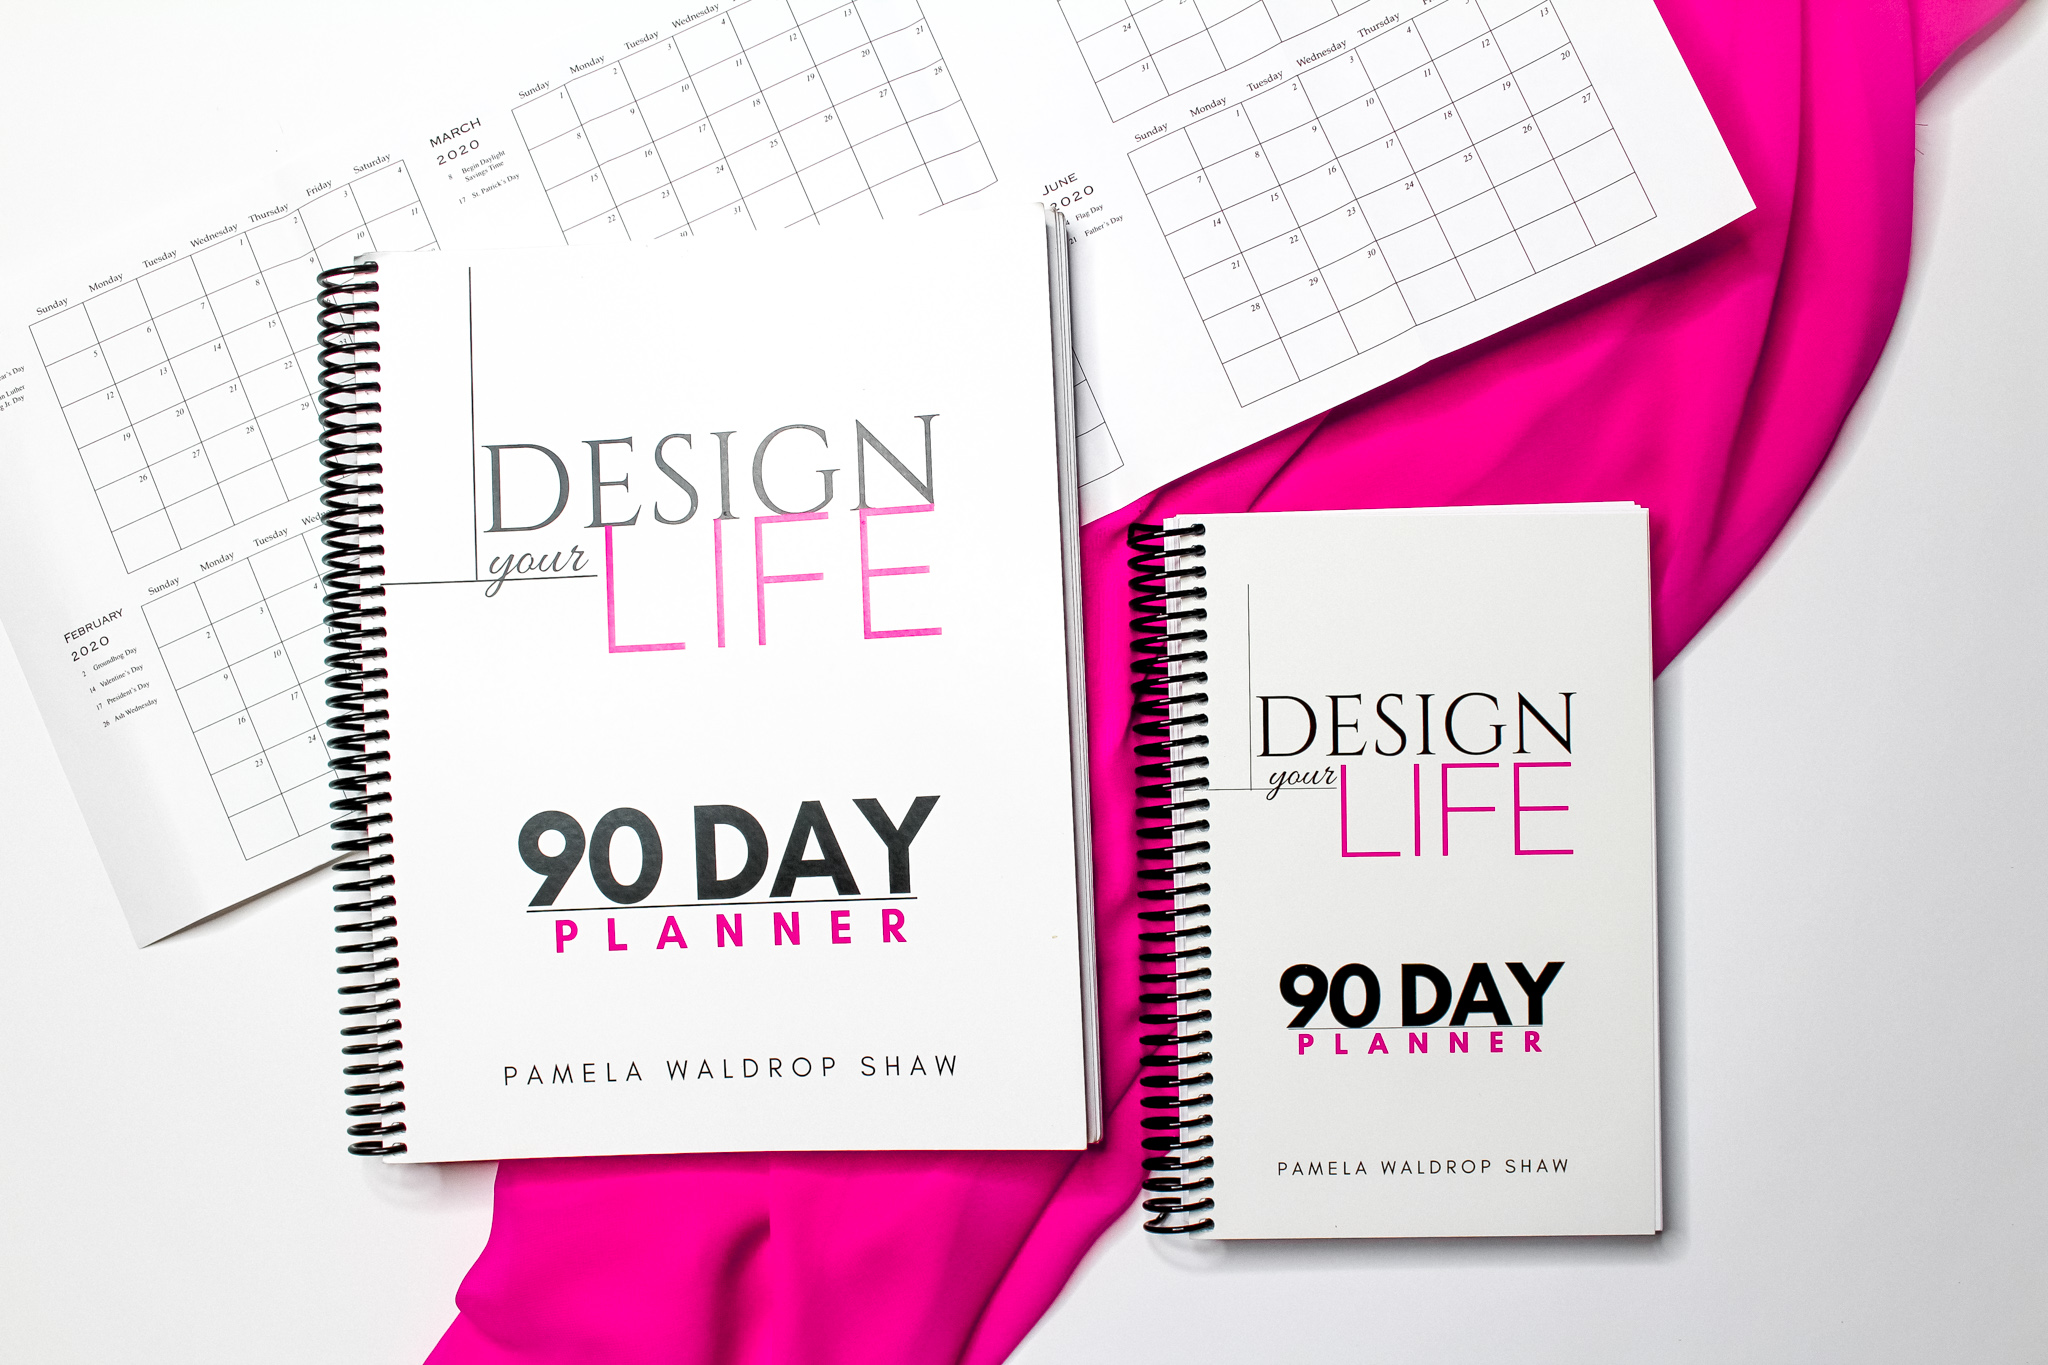 Design Your Life 90 Day Planner - Pamela Waldrop Shaw